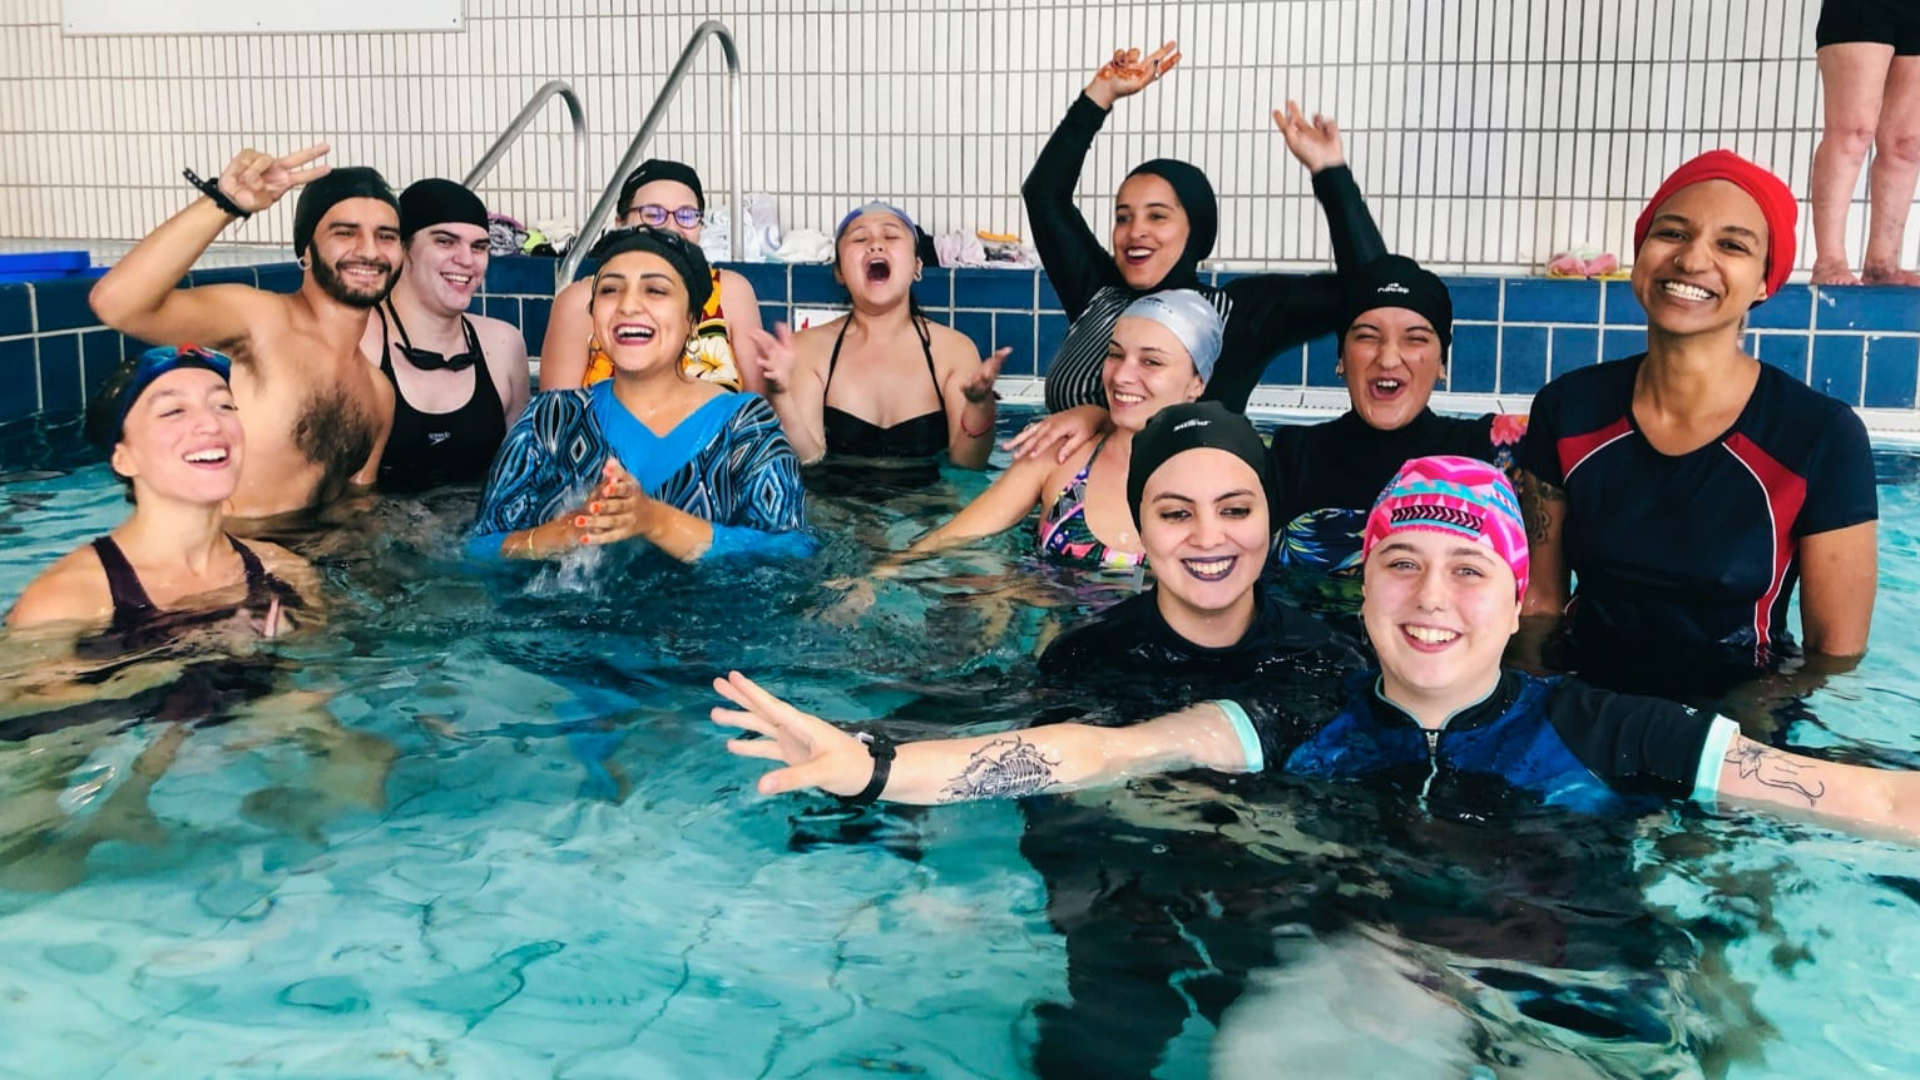 Muslim women defy ban to swim in burkinis at French pool - BBC News